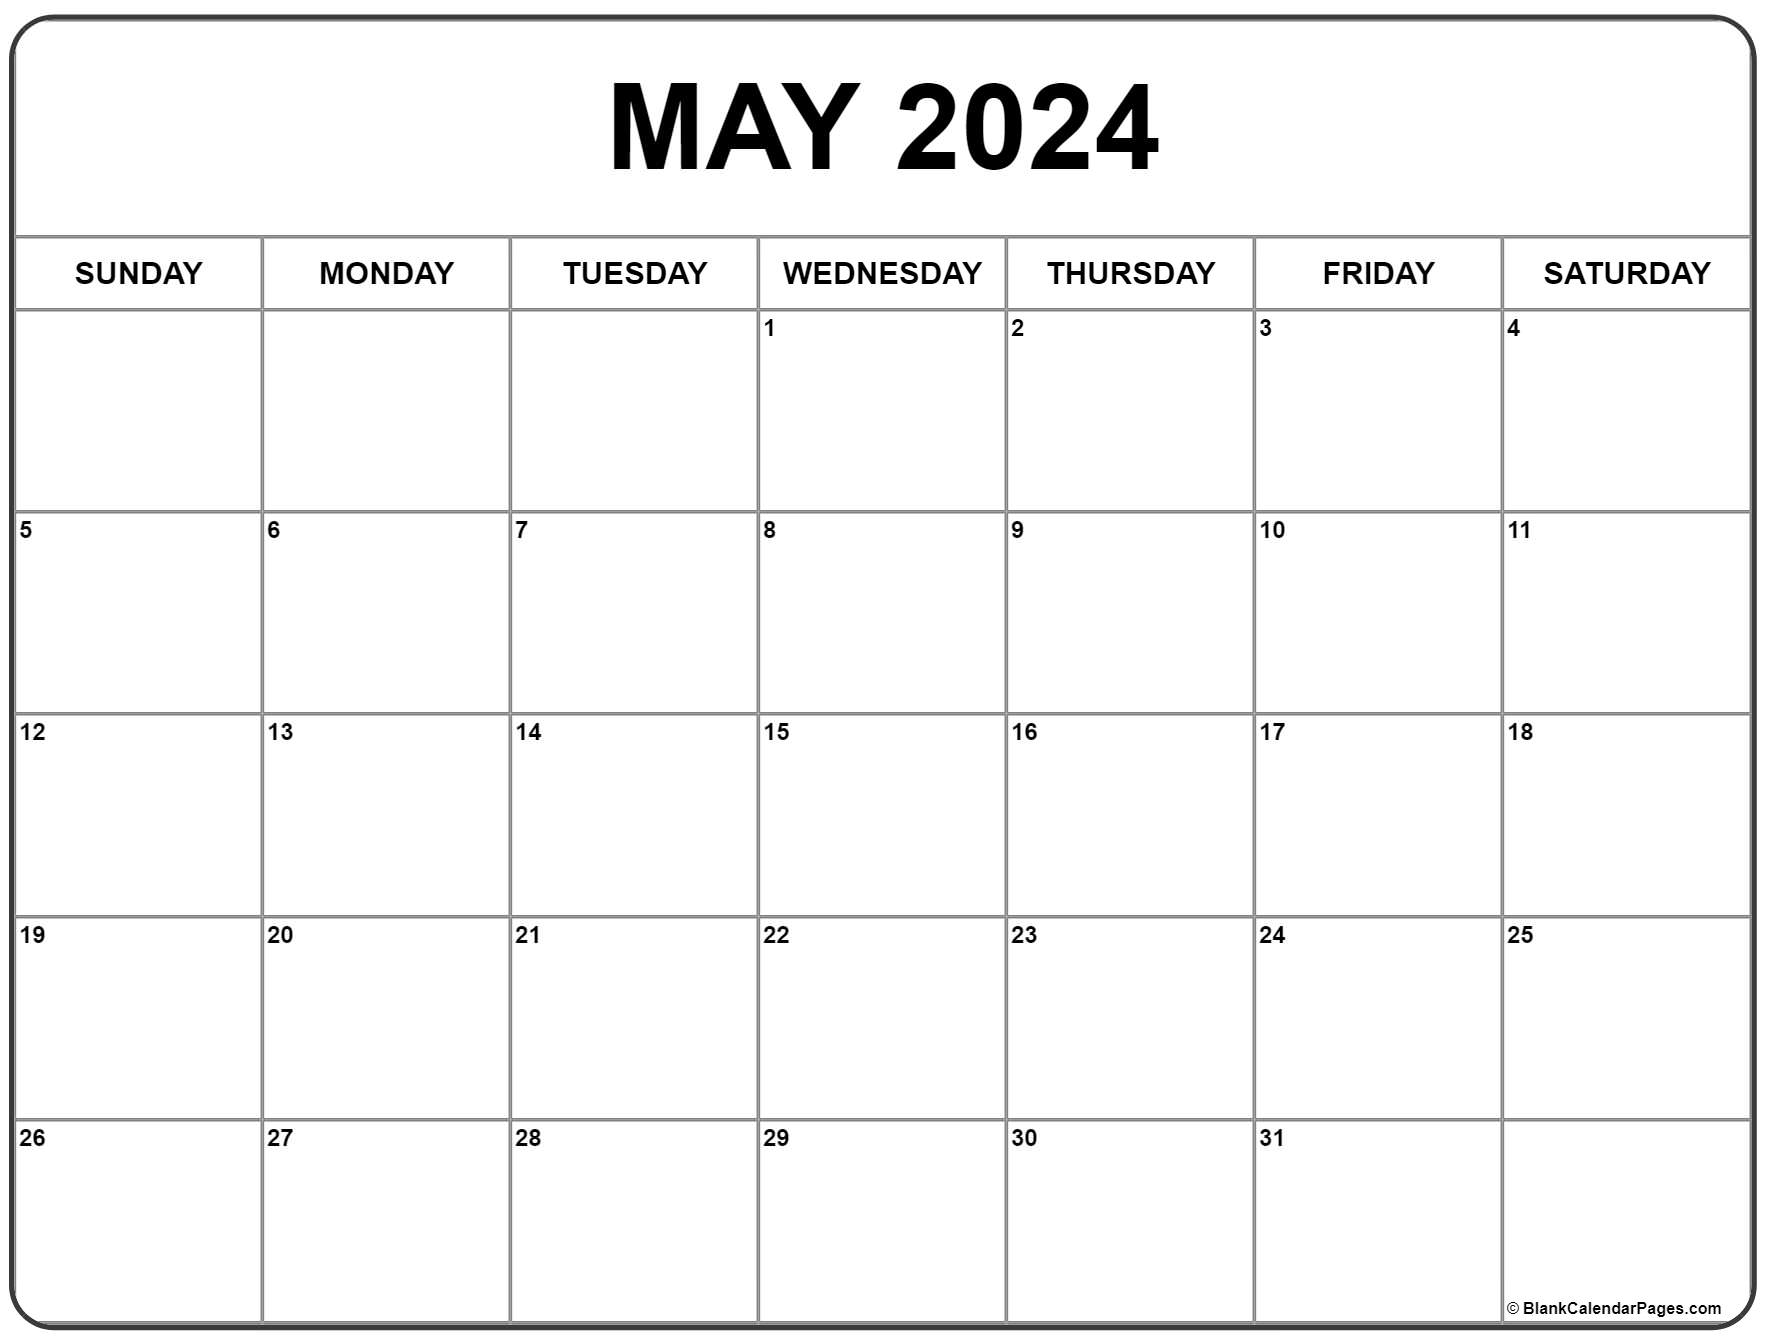 May 2024 Calendar | Free Printable Calendar for Printable May 2024 Calendar